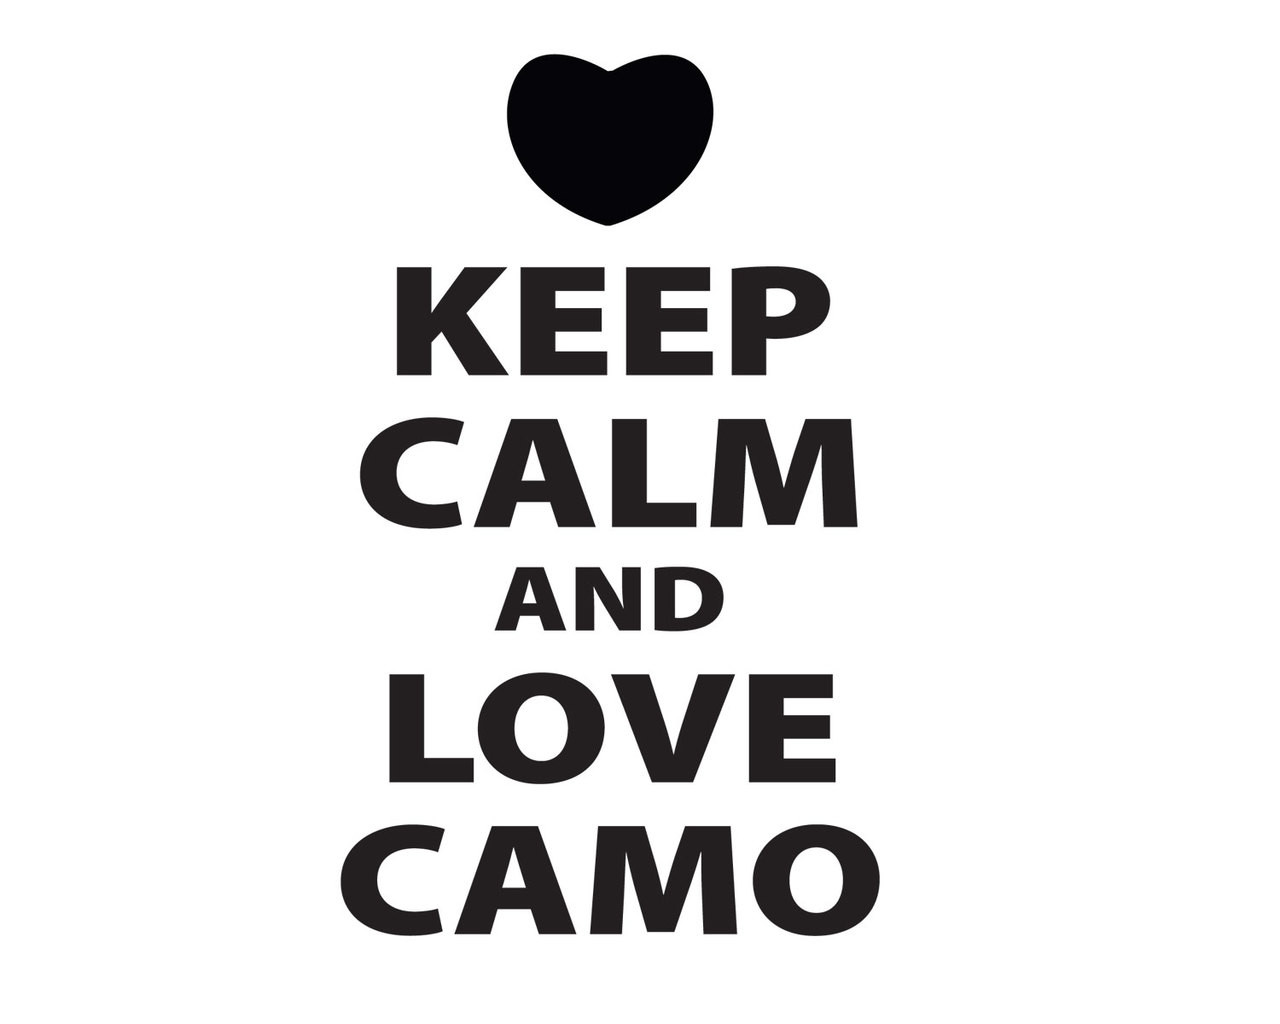 keep calm and camo